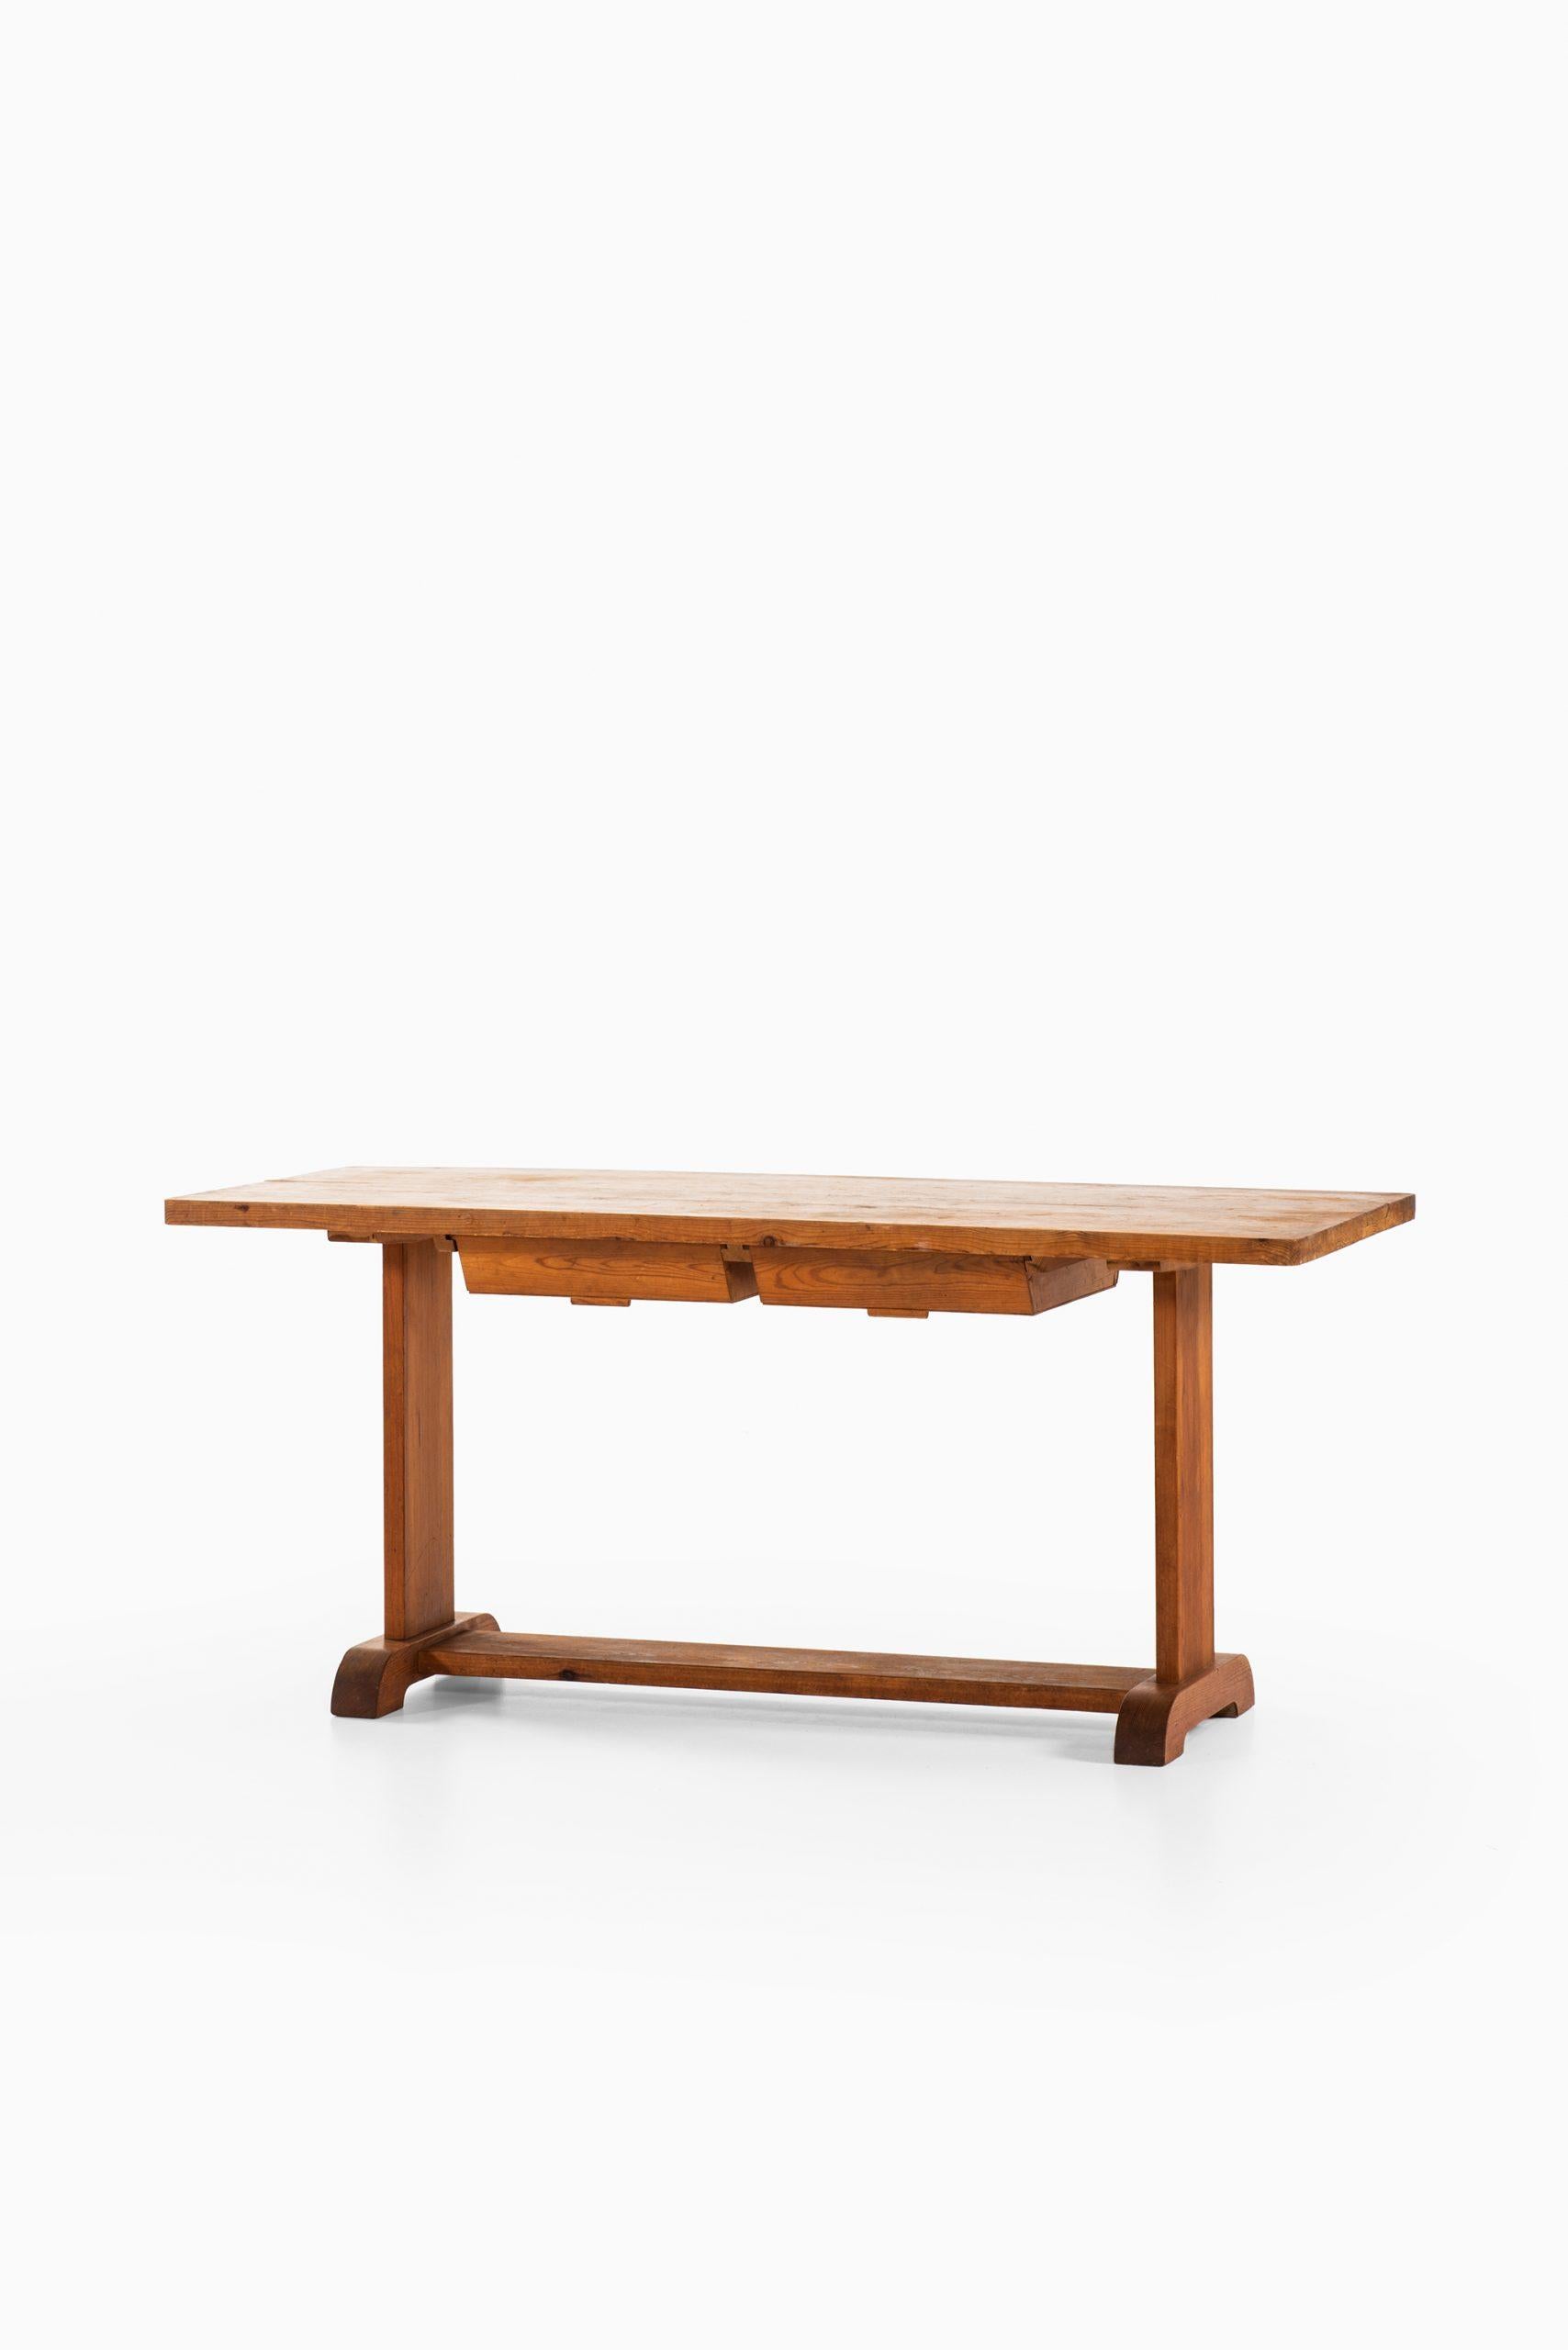 Scandinavian Modern Desk / Dining Table Produced in Sweden